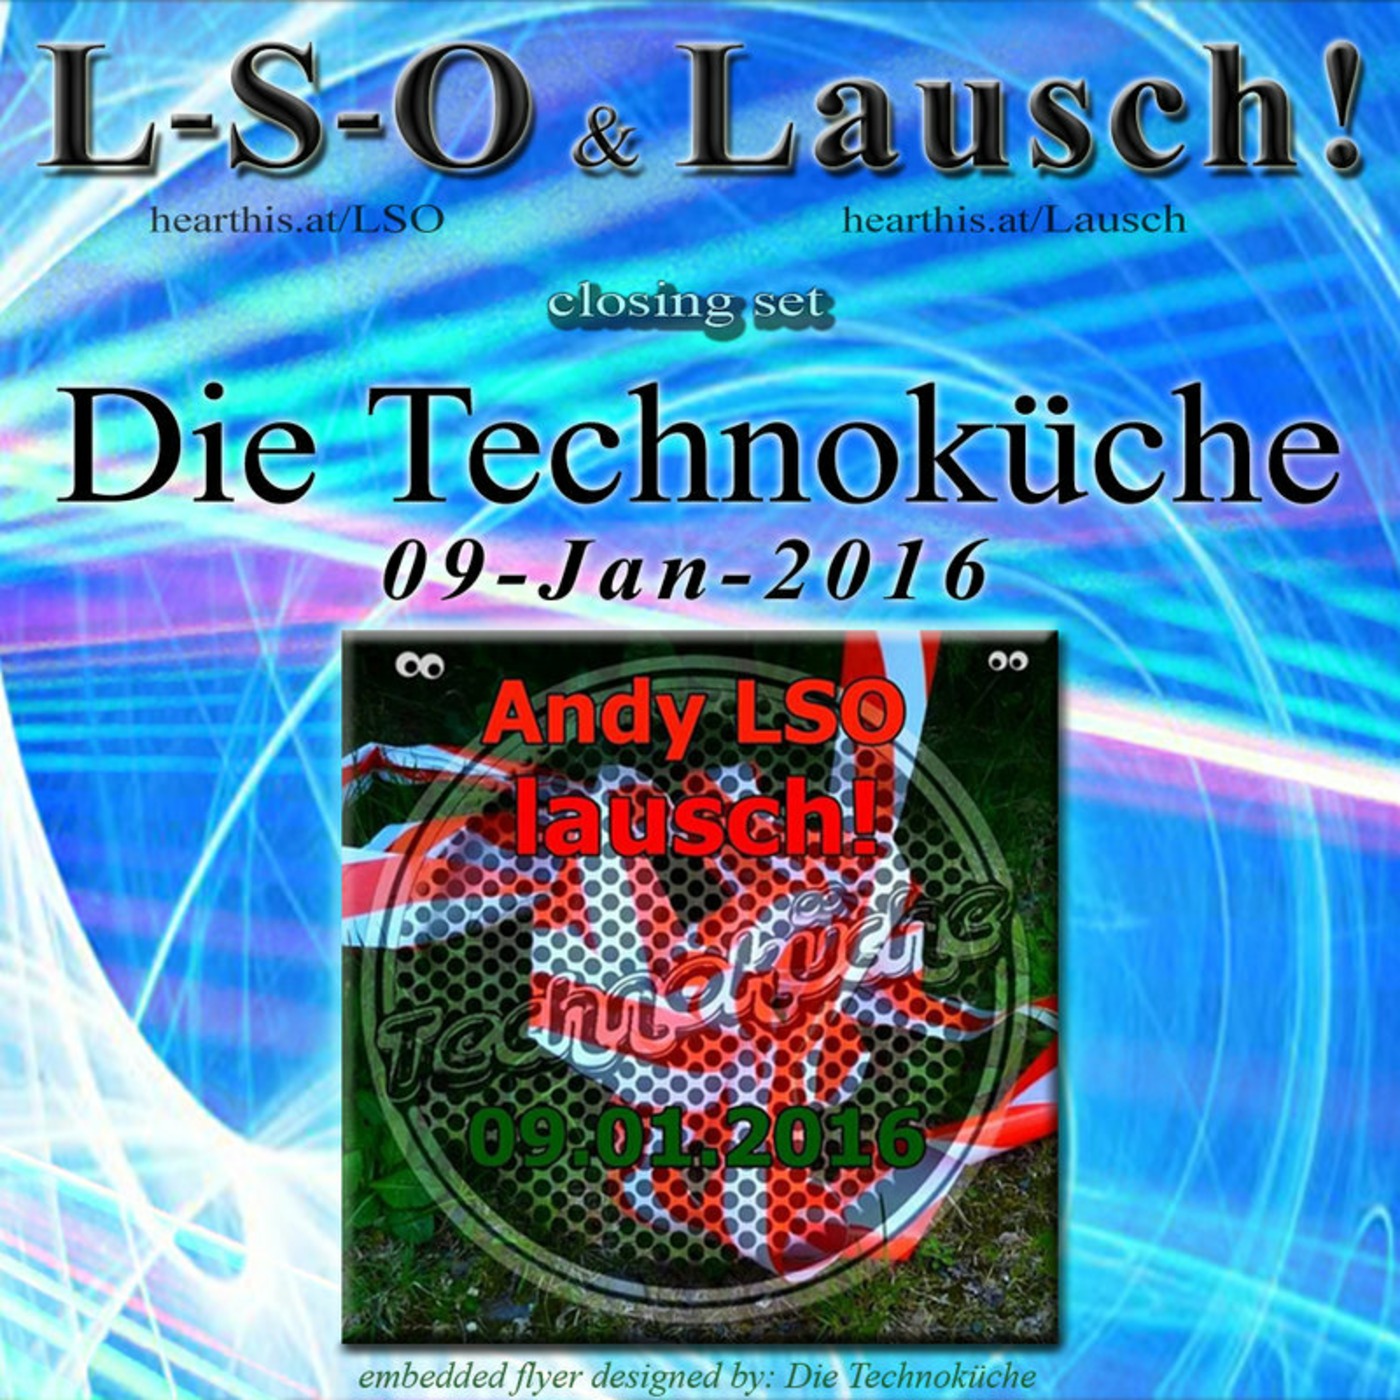 LSO b2b Lausch! @ Die Technoküche (2016-01-09) closing